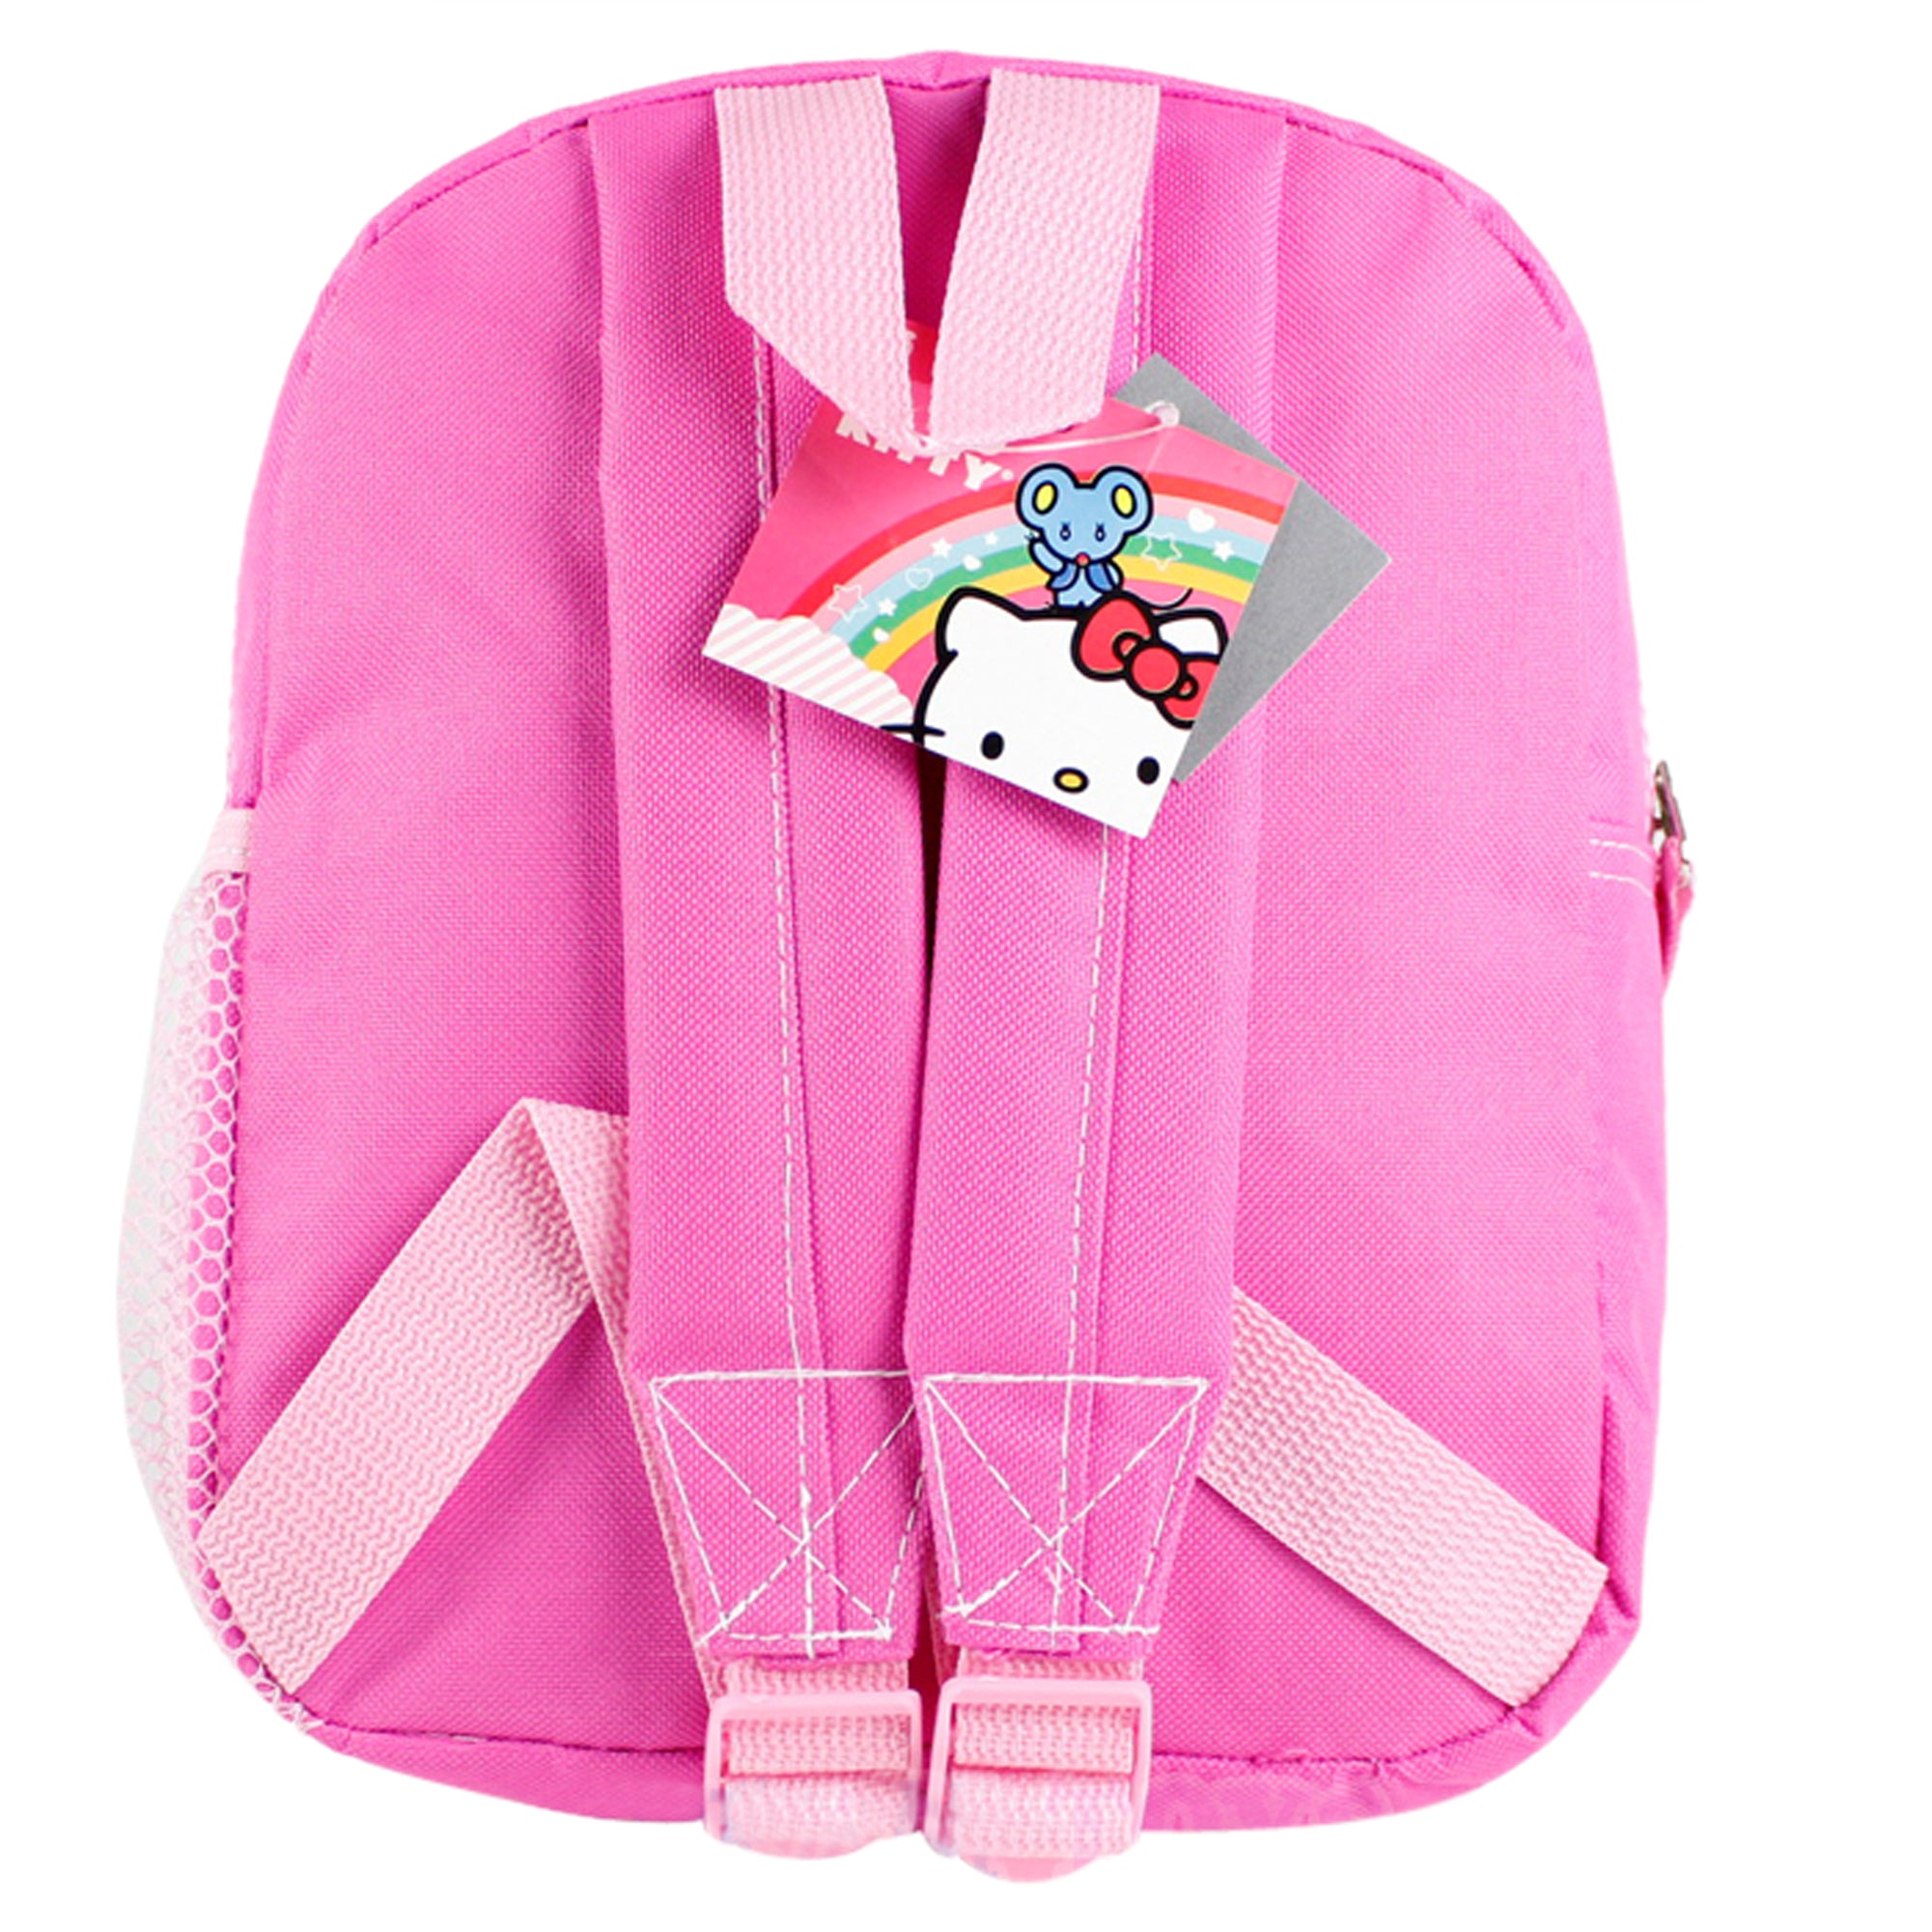 Mini Backpack - - Pink Box Checker New School Bag Book Girls 82350 - image 4 of 4